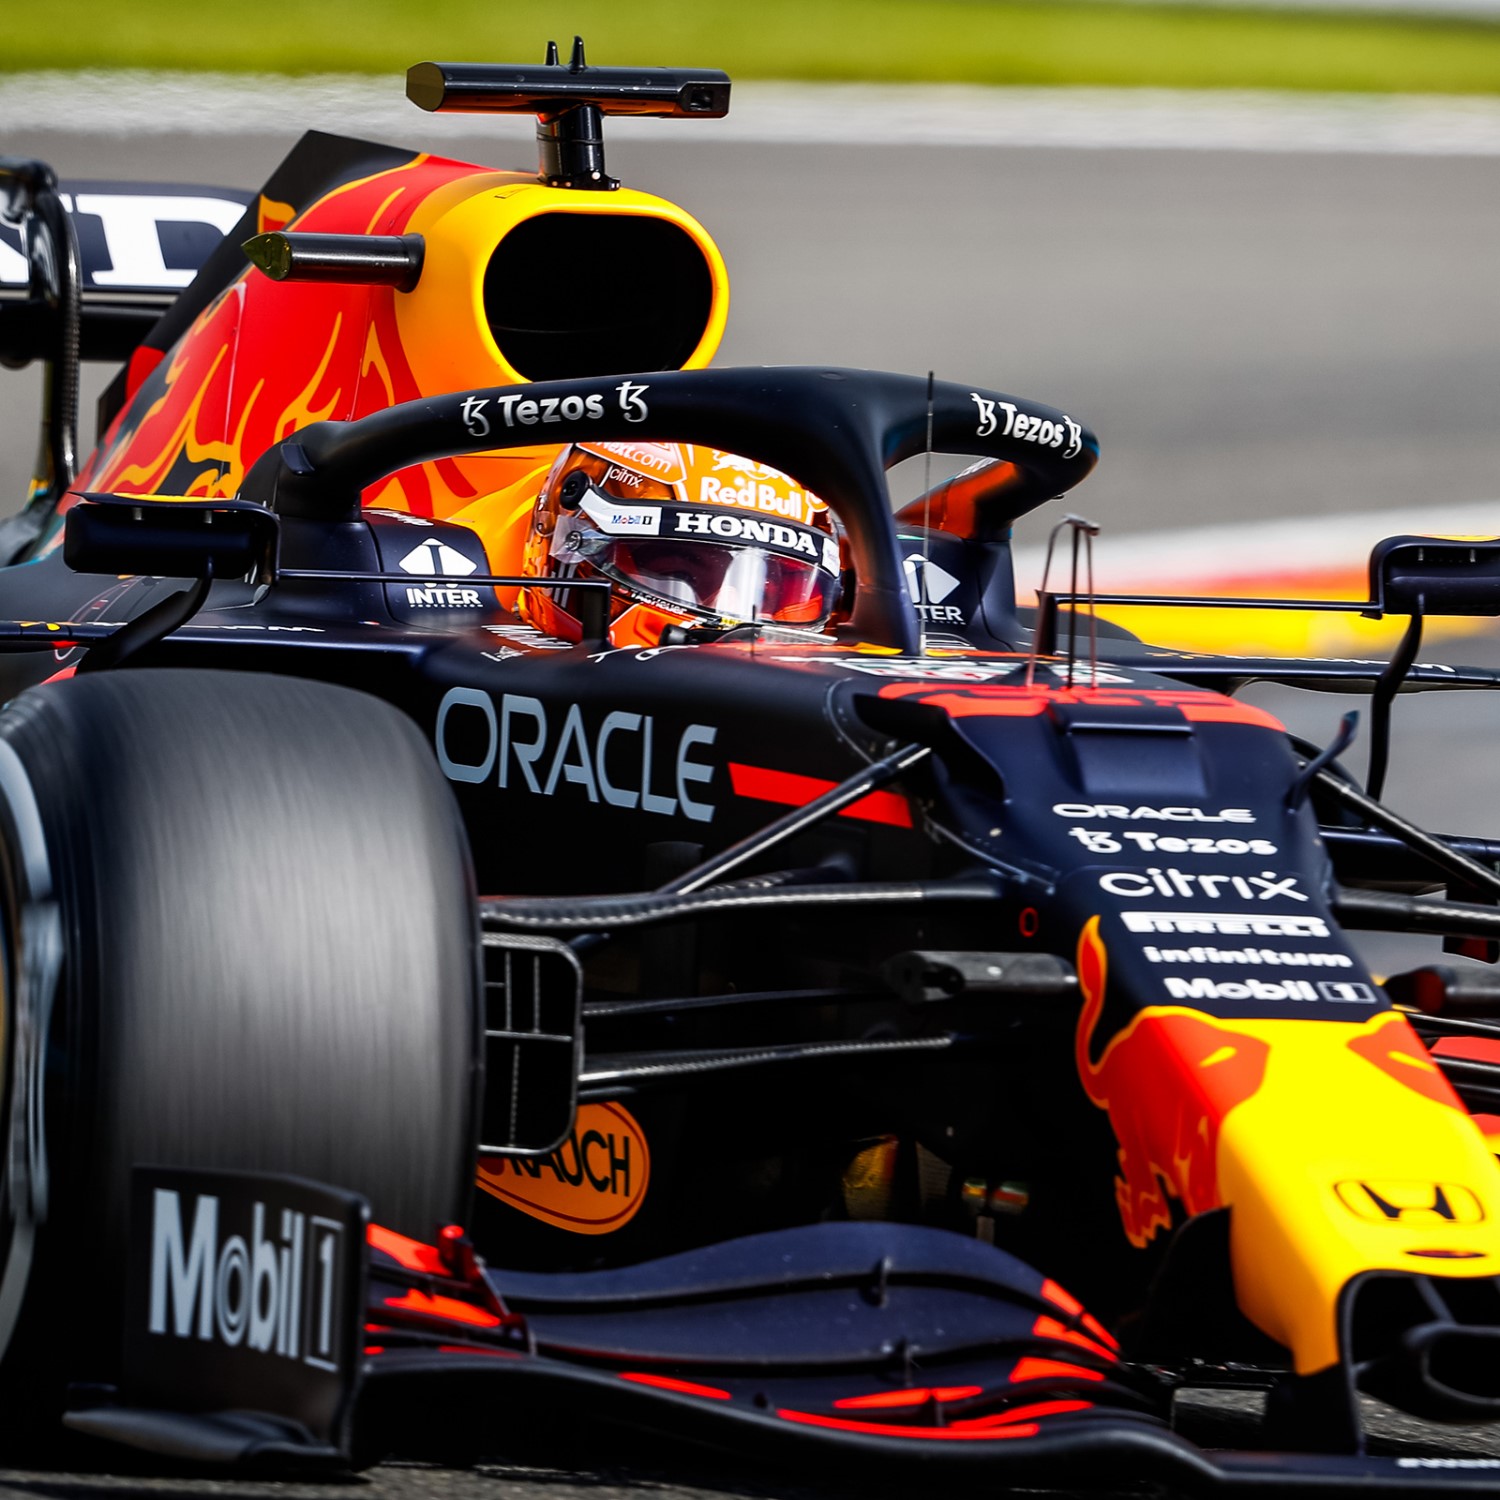 F1: Verstappen wins sensational pole for wet Belgian GP - AutoRacing1.com